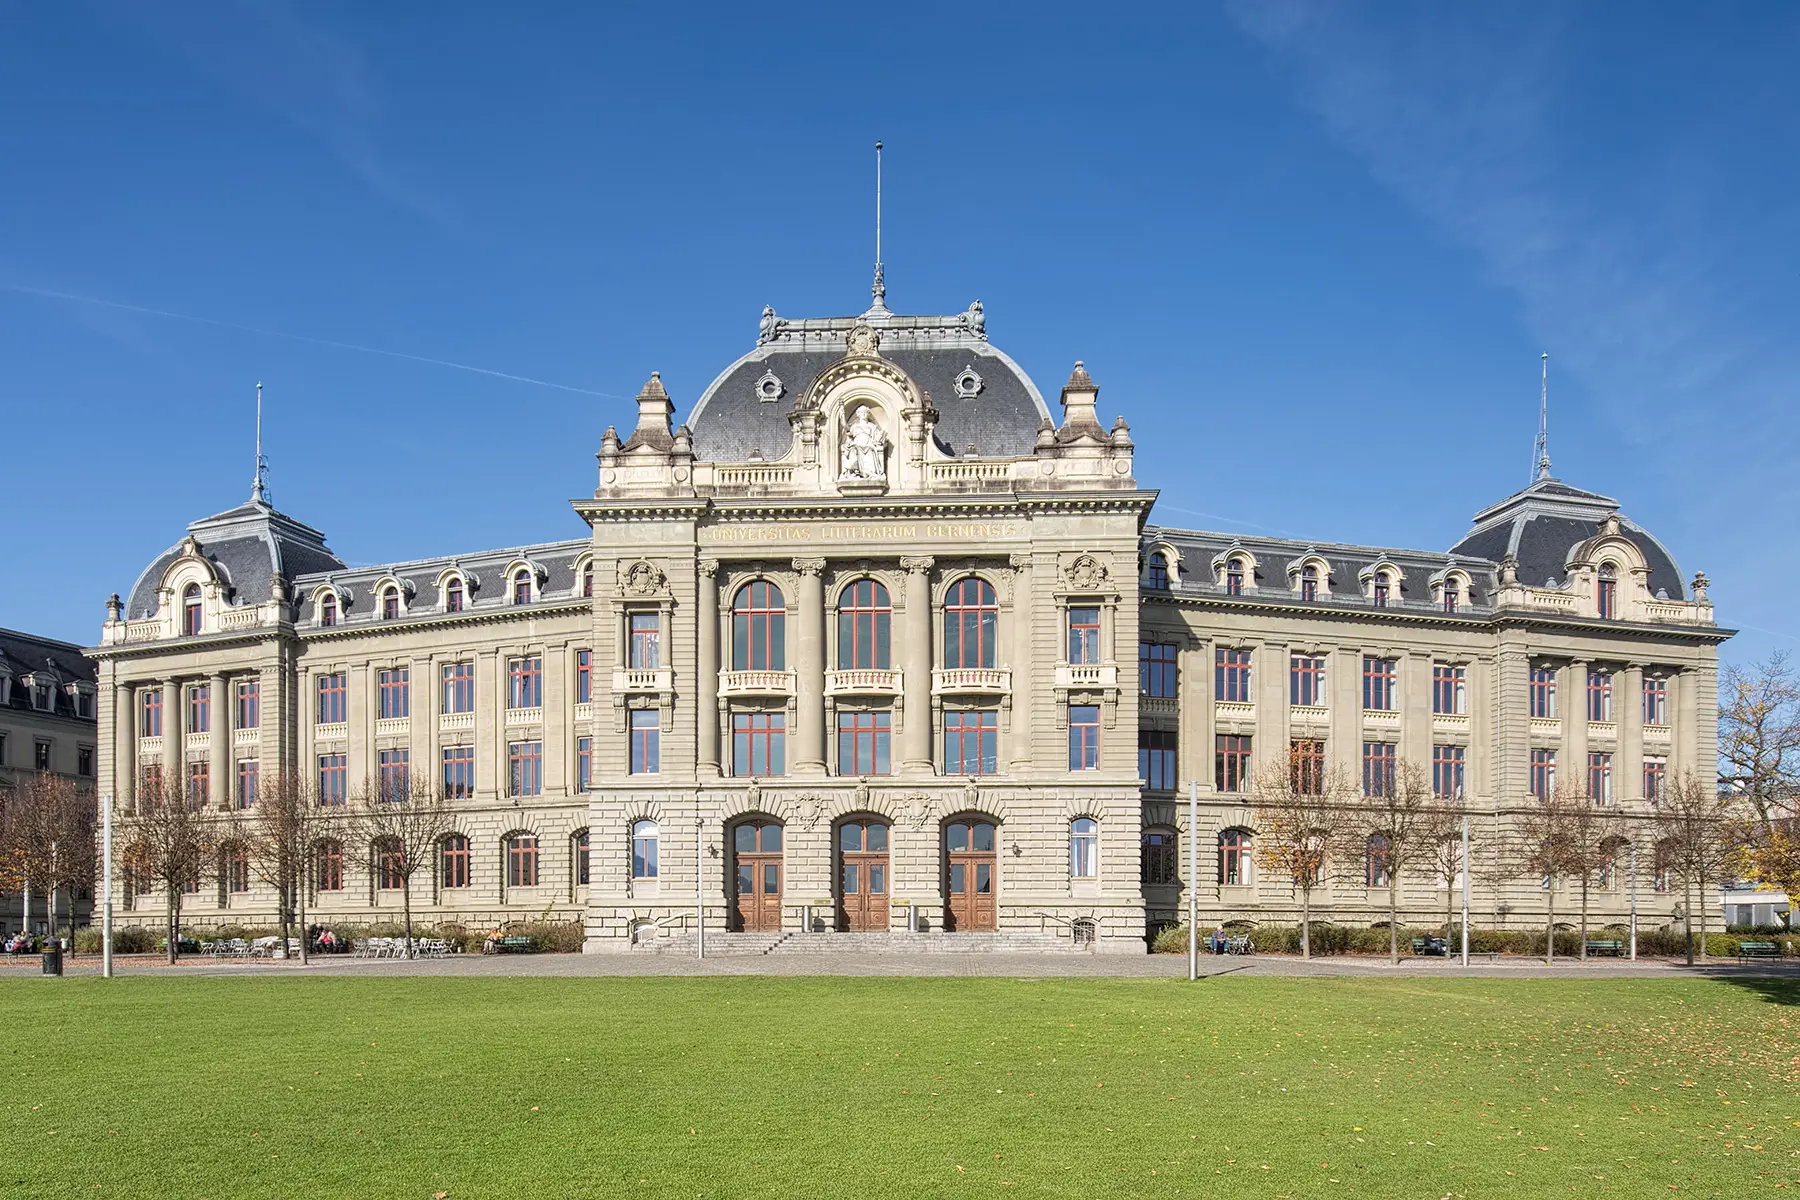 University of Bern